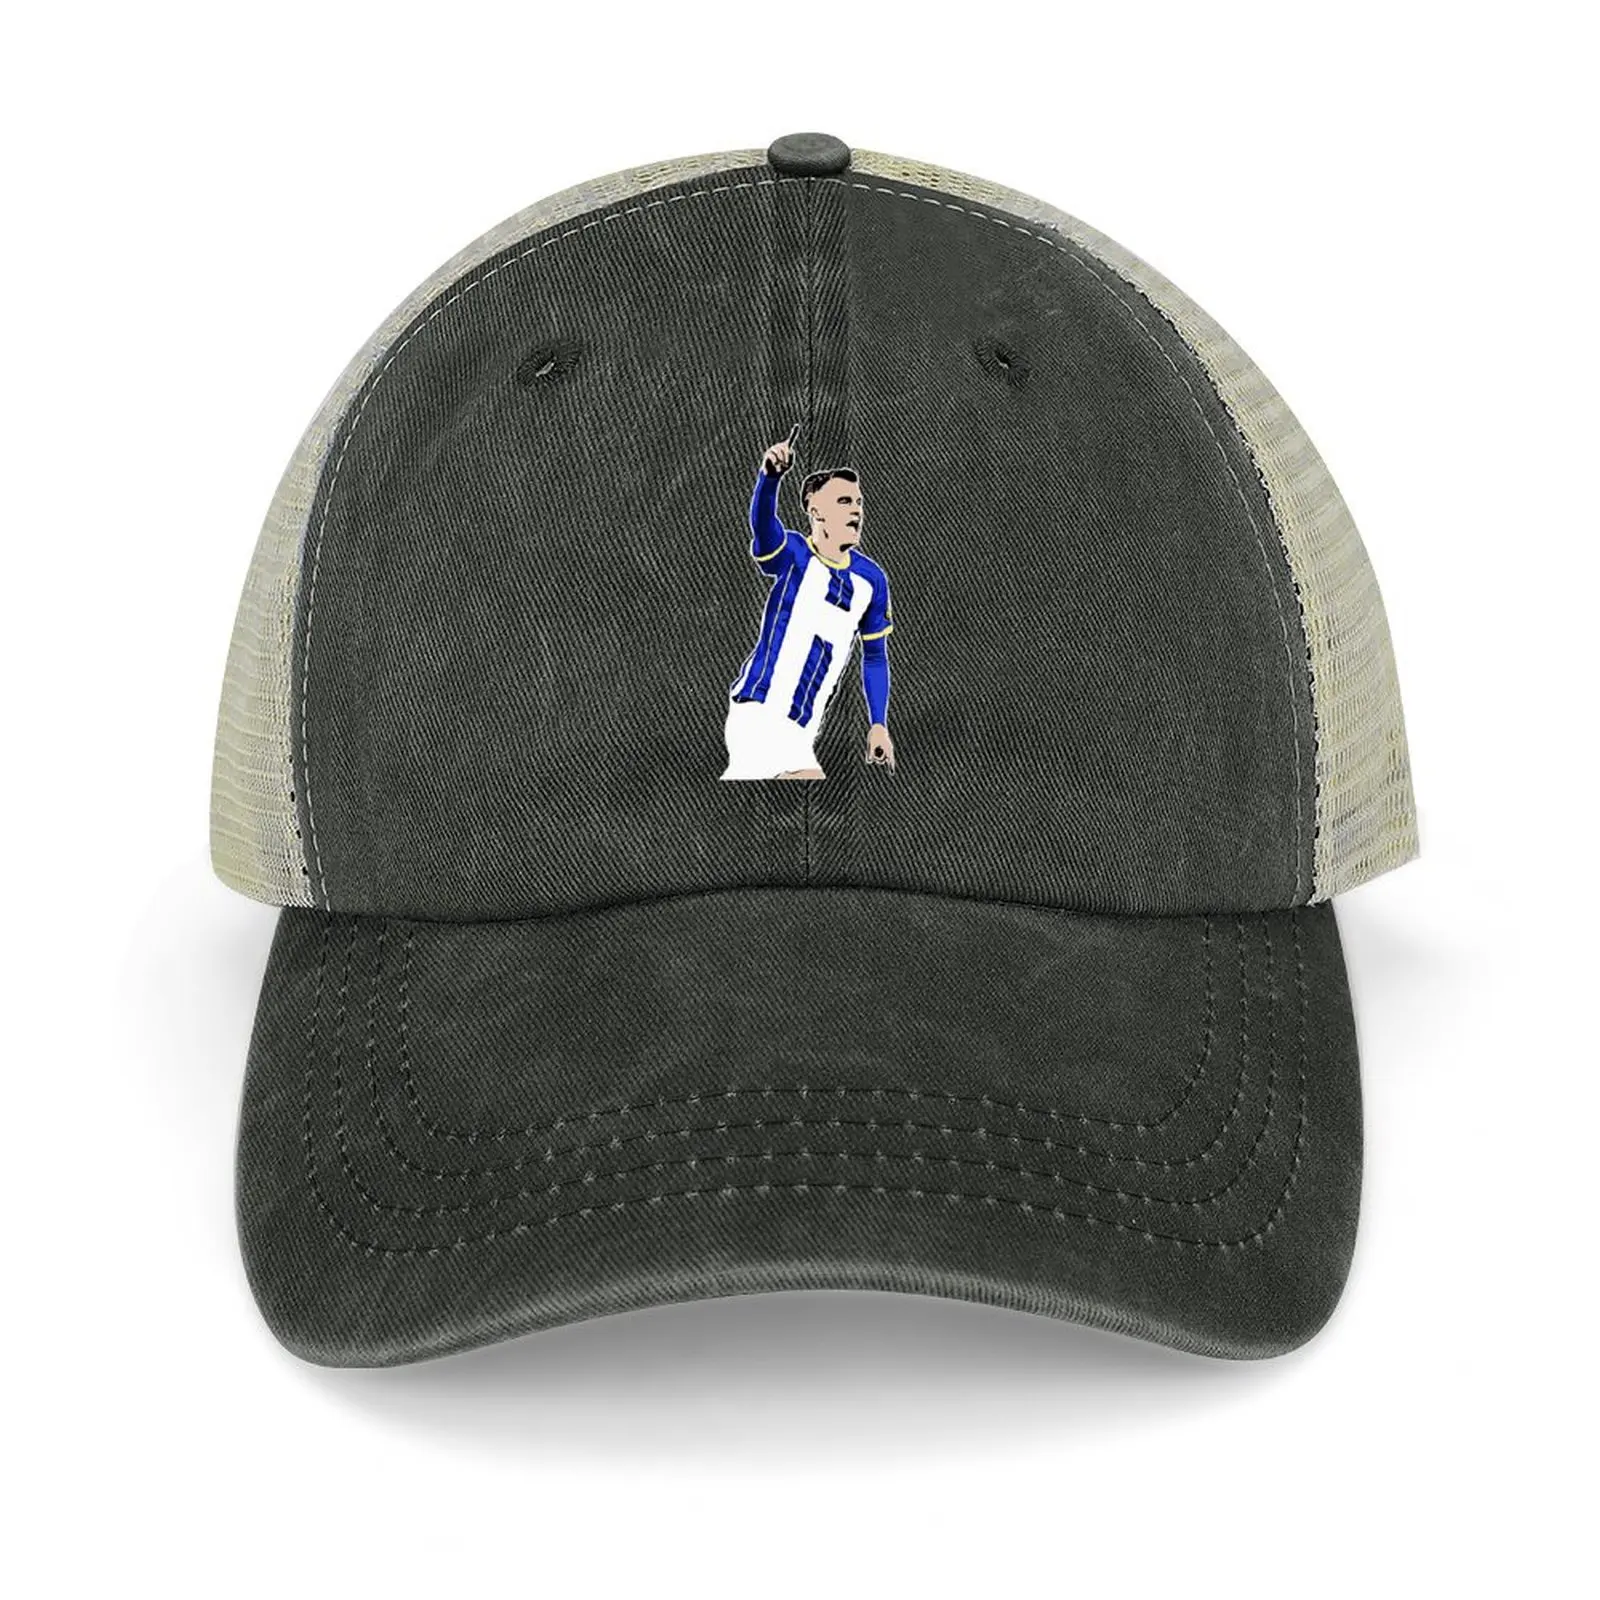 

Solly March Cowboy Hat Snapback Cap Dropshipping Visor Golf Women Men's